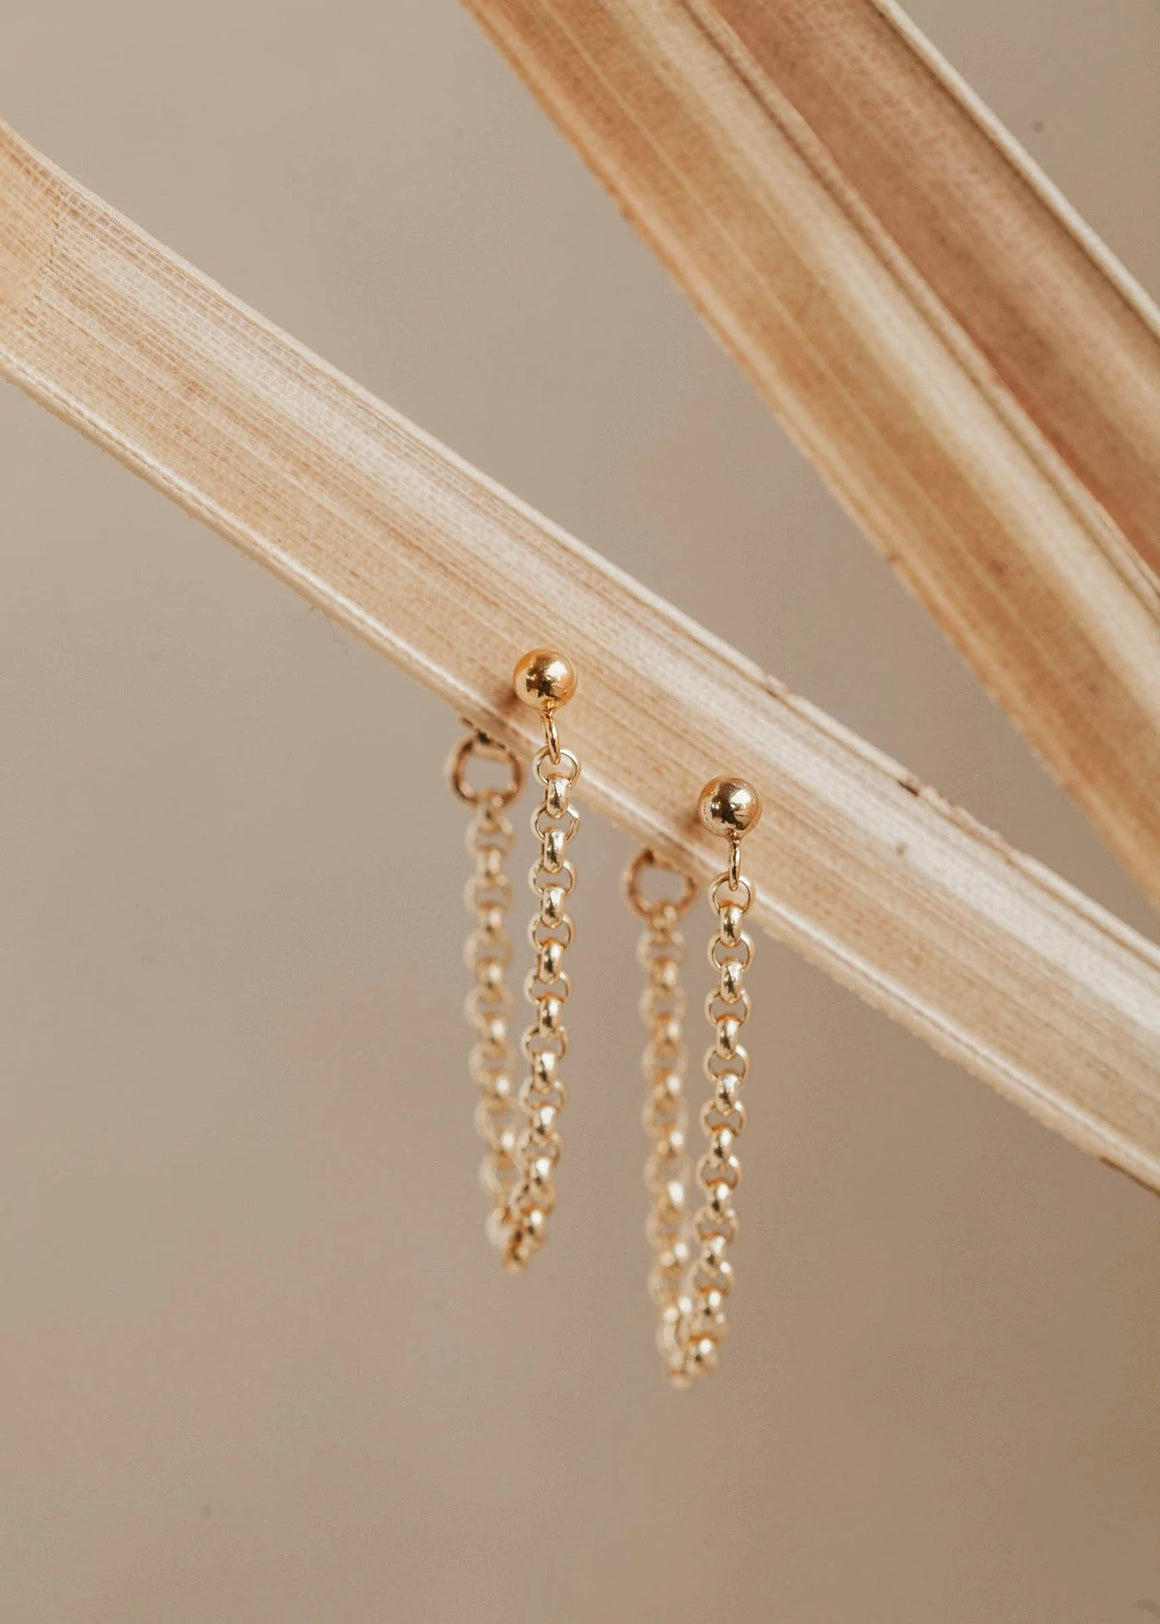 Earrings | Annex Studs | 14kt Gold Filled